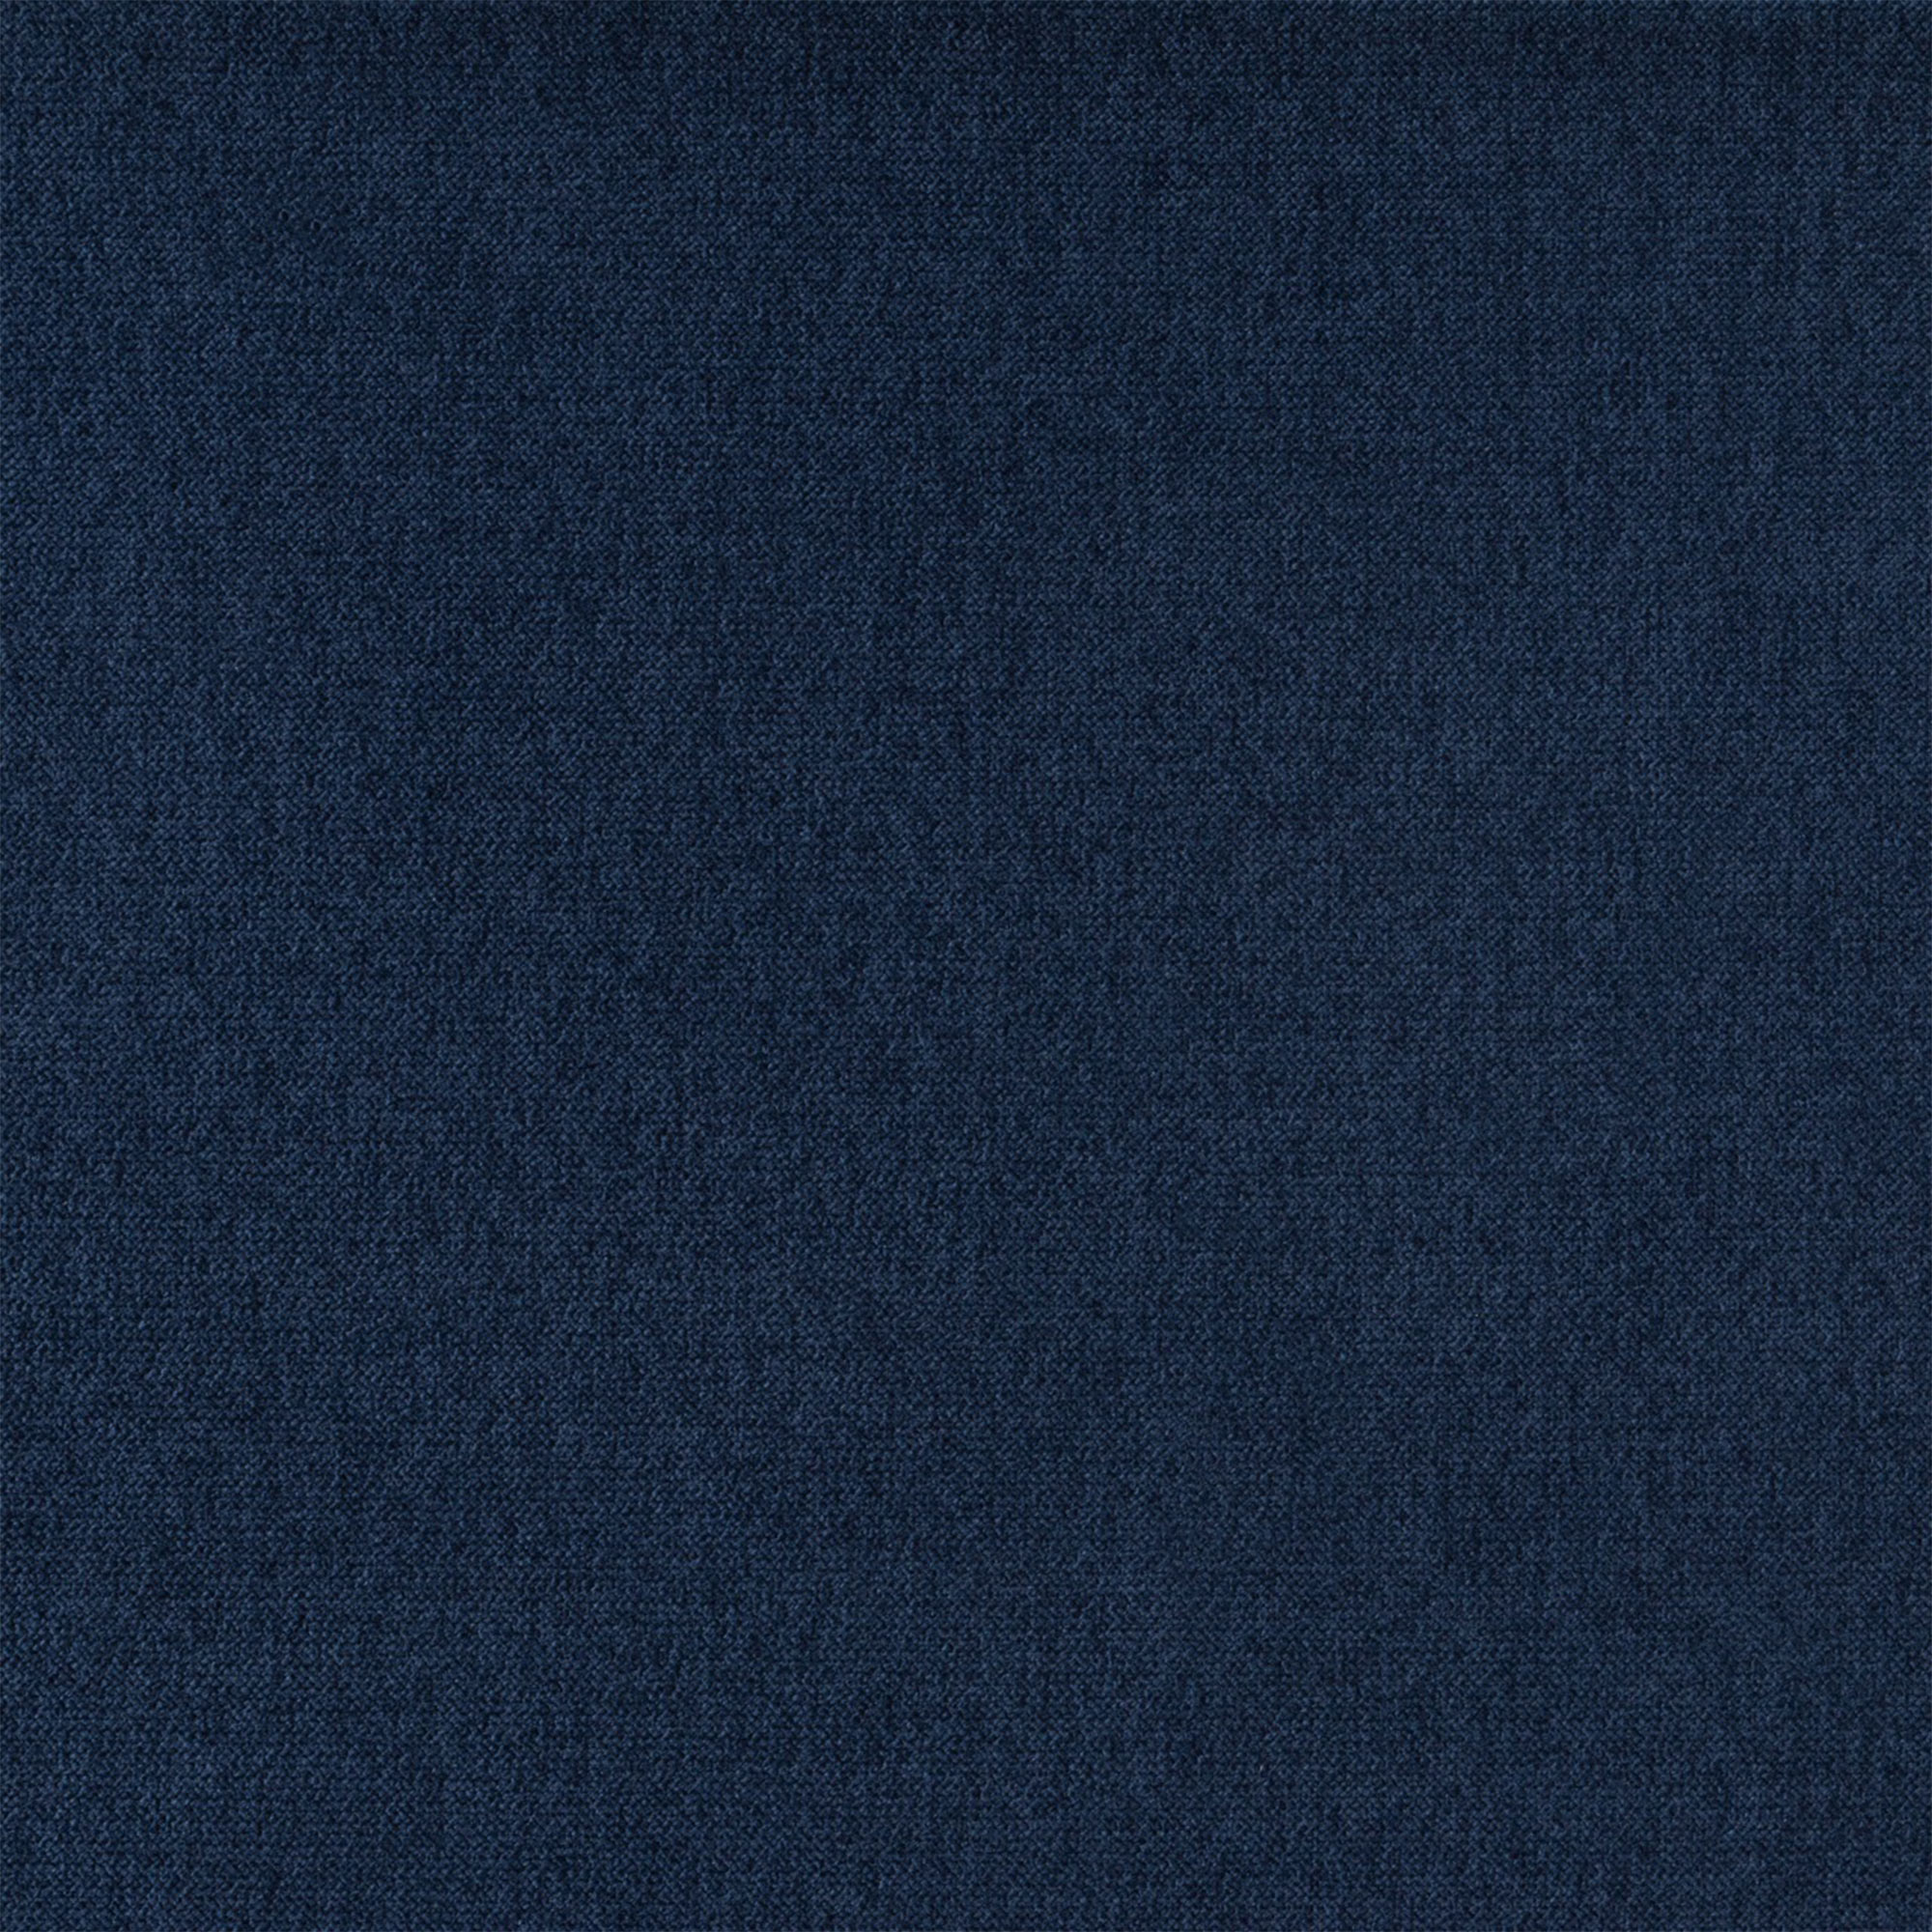 Кресло AS Алана 75.5x82x83 венге/деним, цвет синий - фото 5